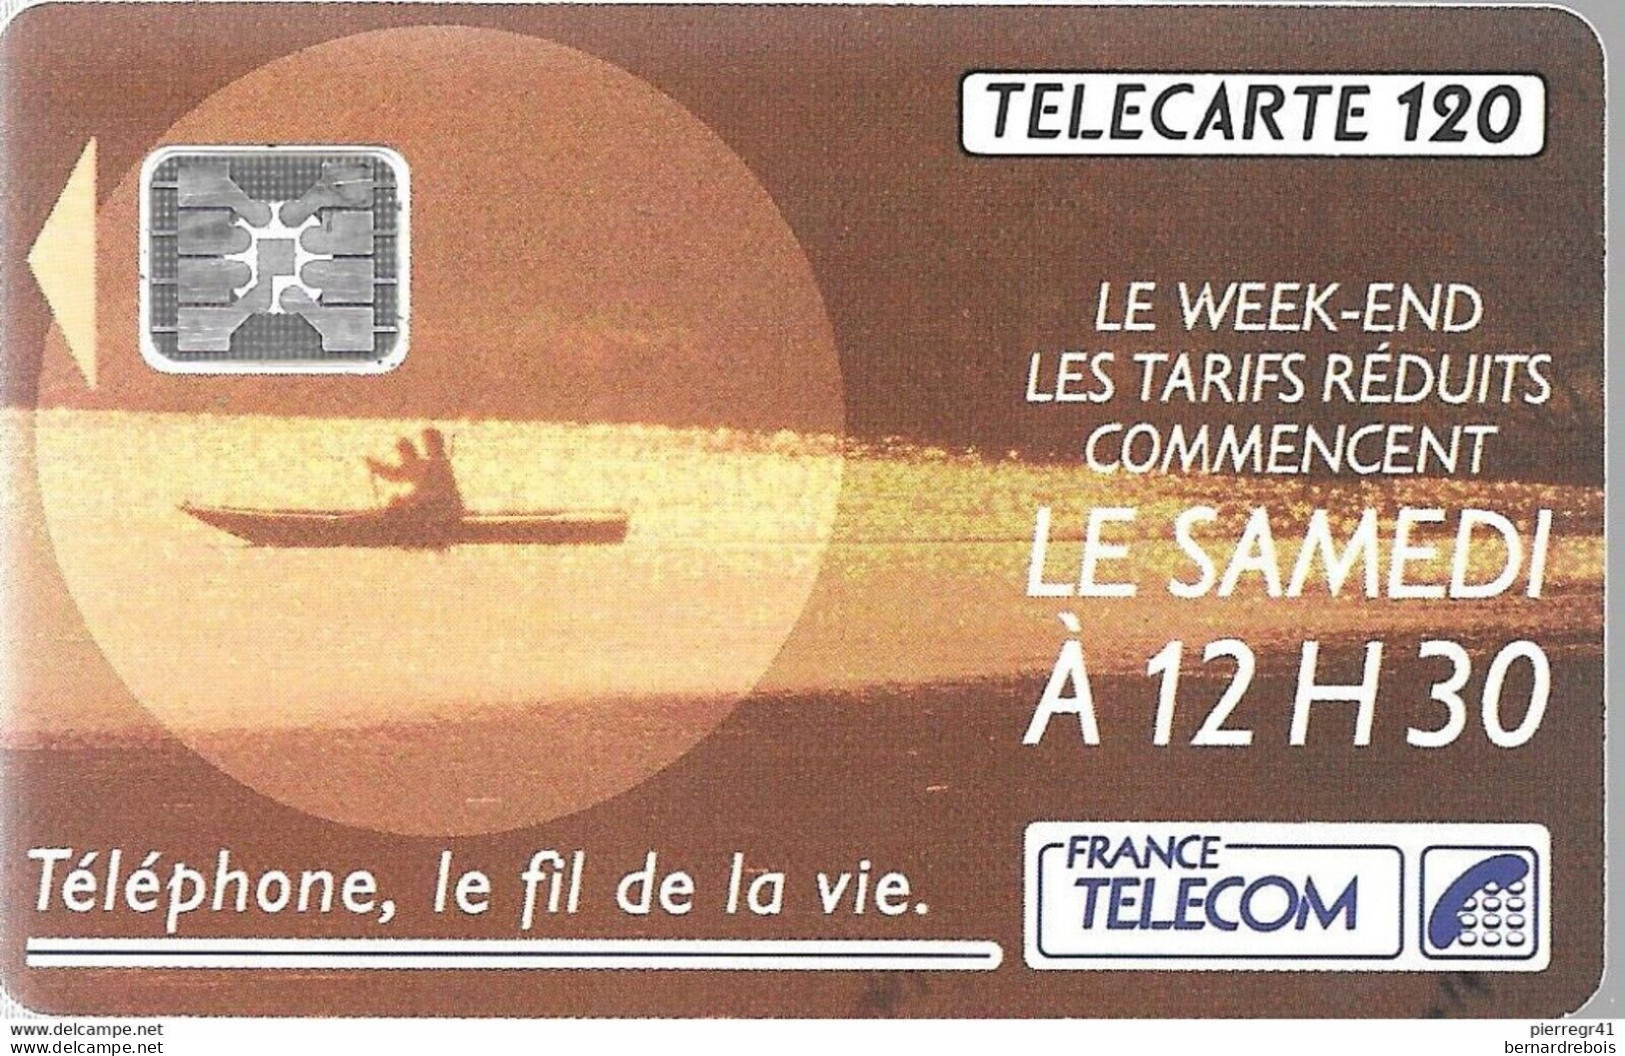 A26 - F210 - LE SAMEDI A 12 H 30 Pour 1 Euro - Cellphone Cards (refills)